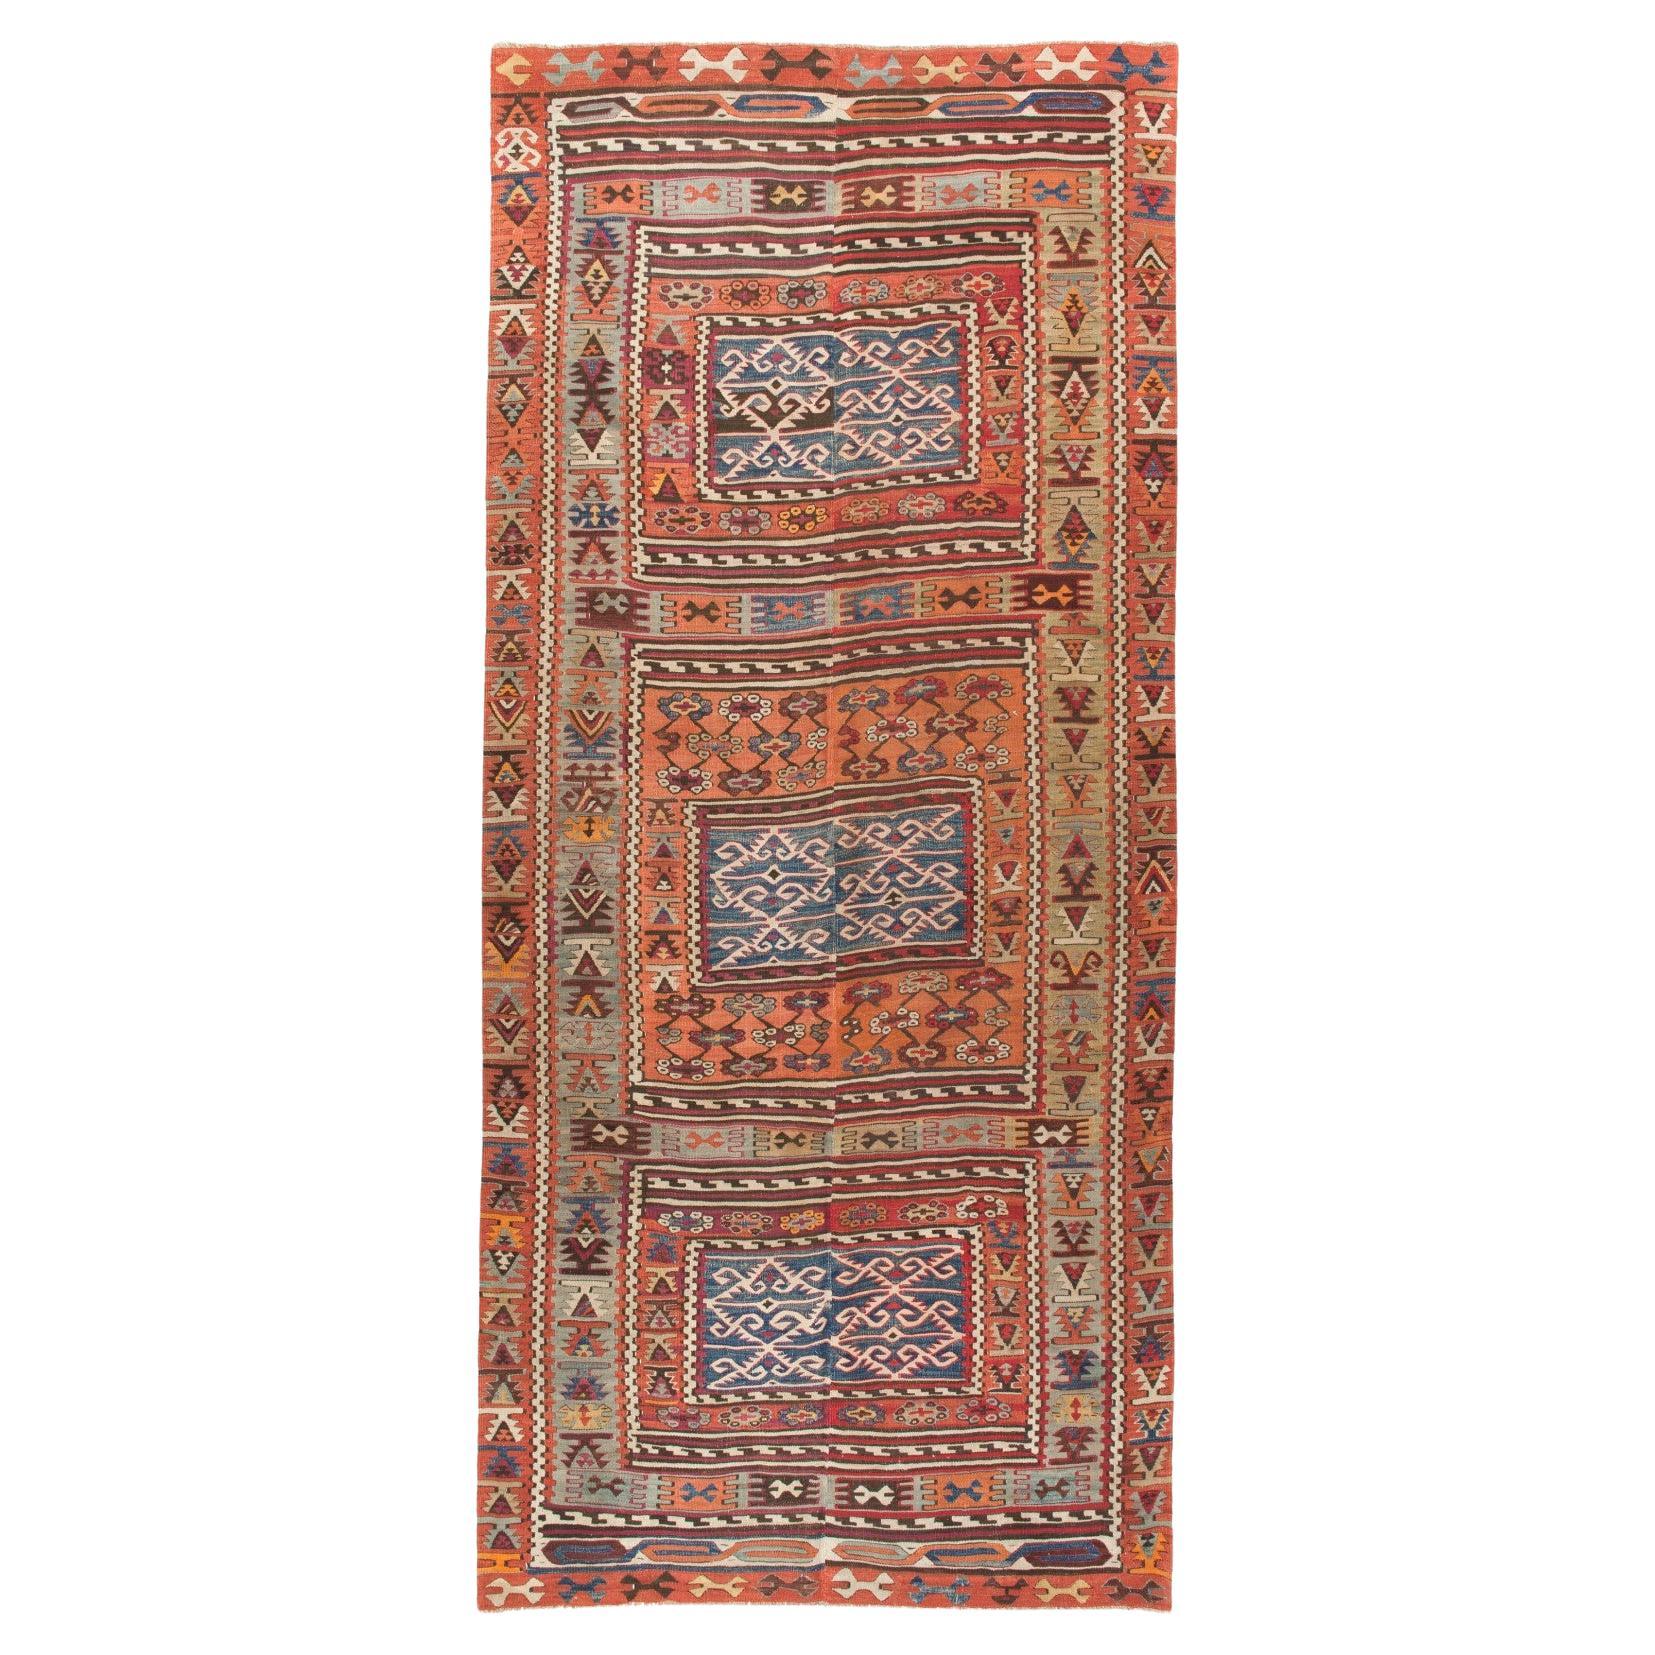 Antique Corum Kilim Rug Wool Old Central Anatolian Turkish Carpet